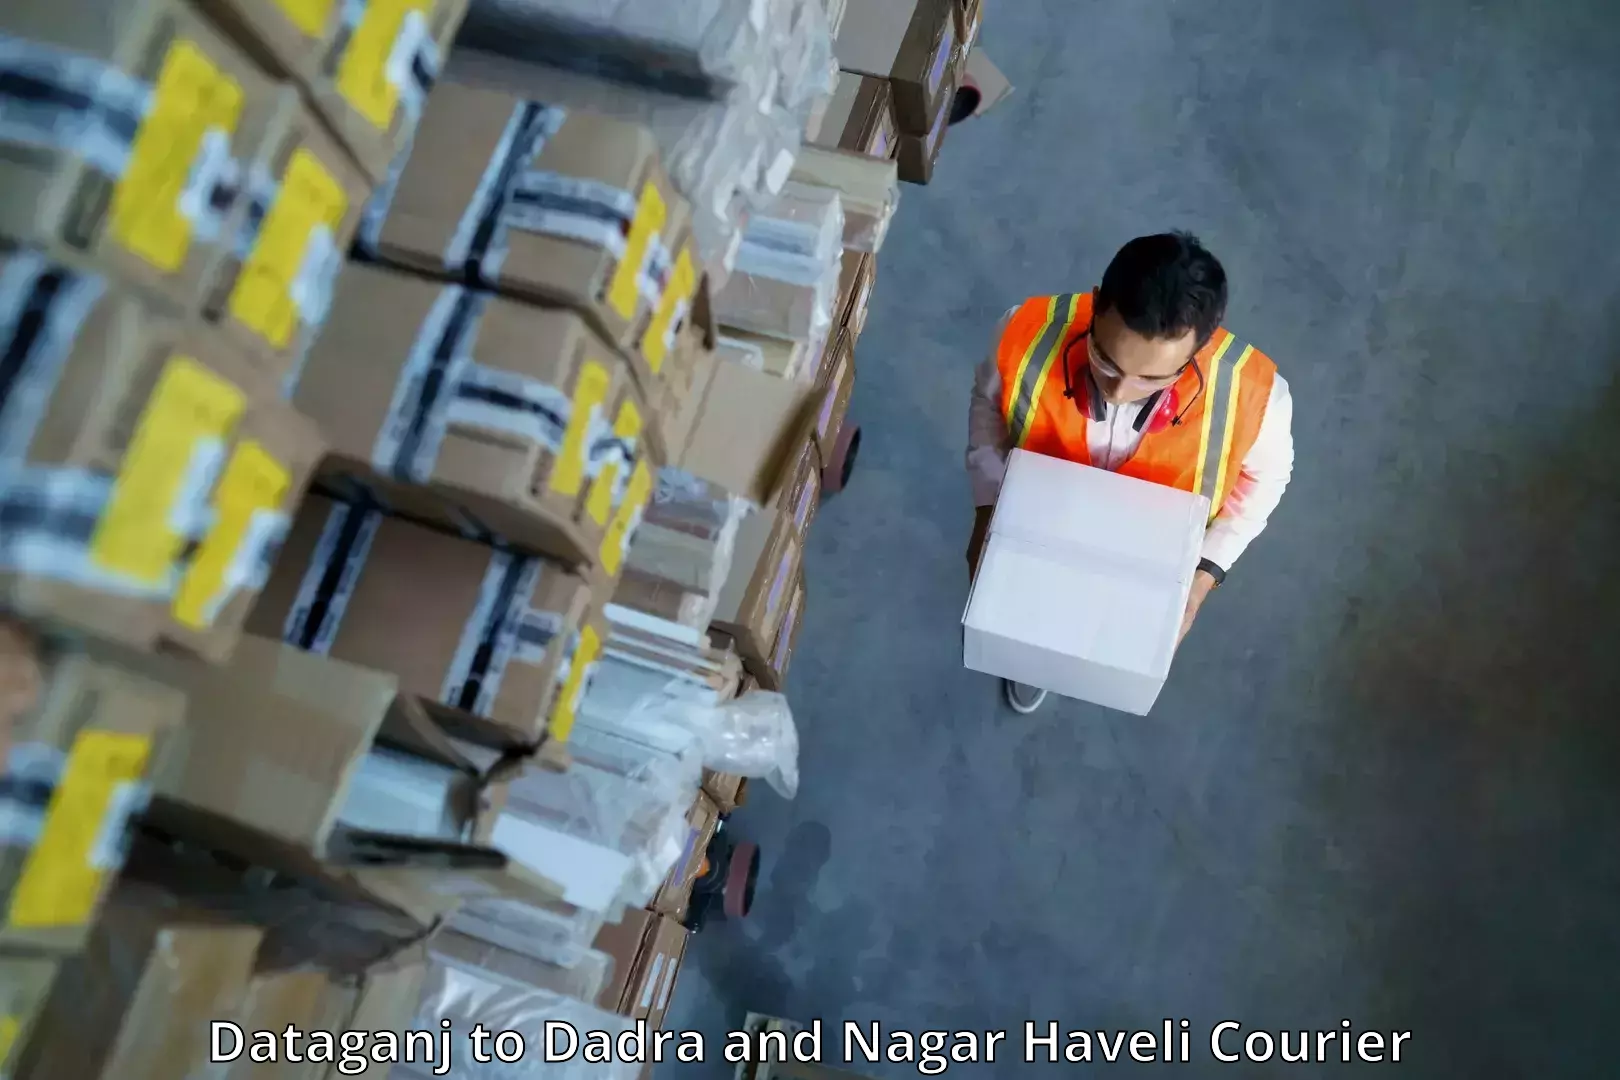 High-speed parcel service Dataganj to Dadra and Nagar Haveli